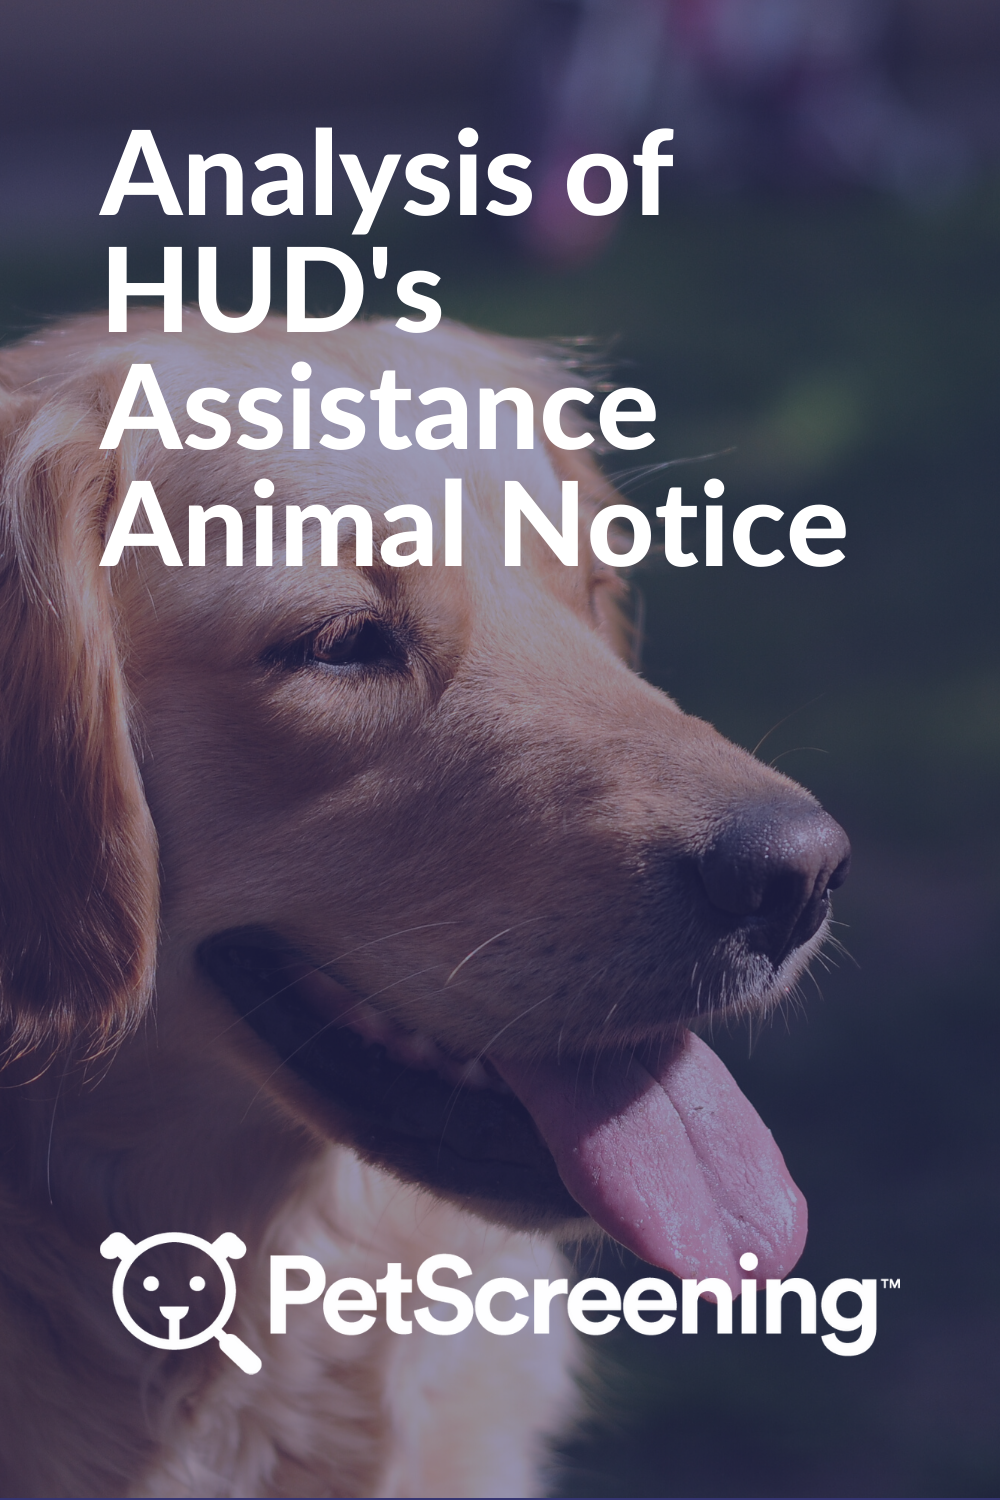 petscreening-s-analysis-of-hud-s-new-assistance-animal-notice